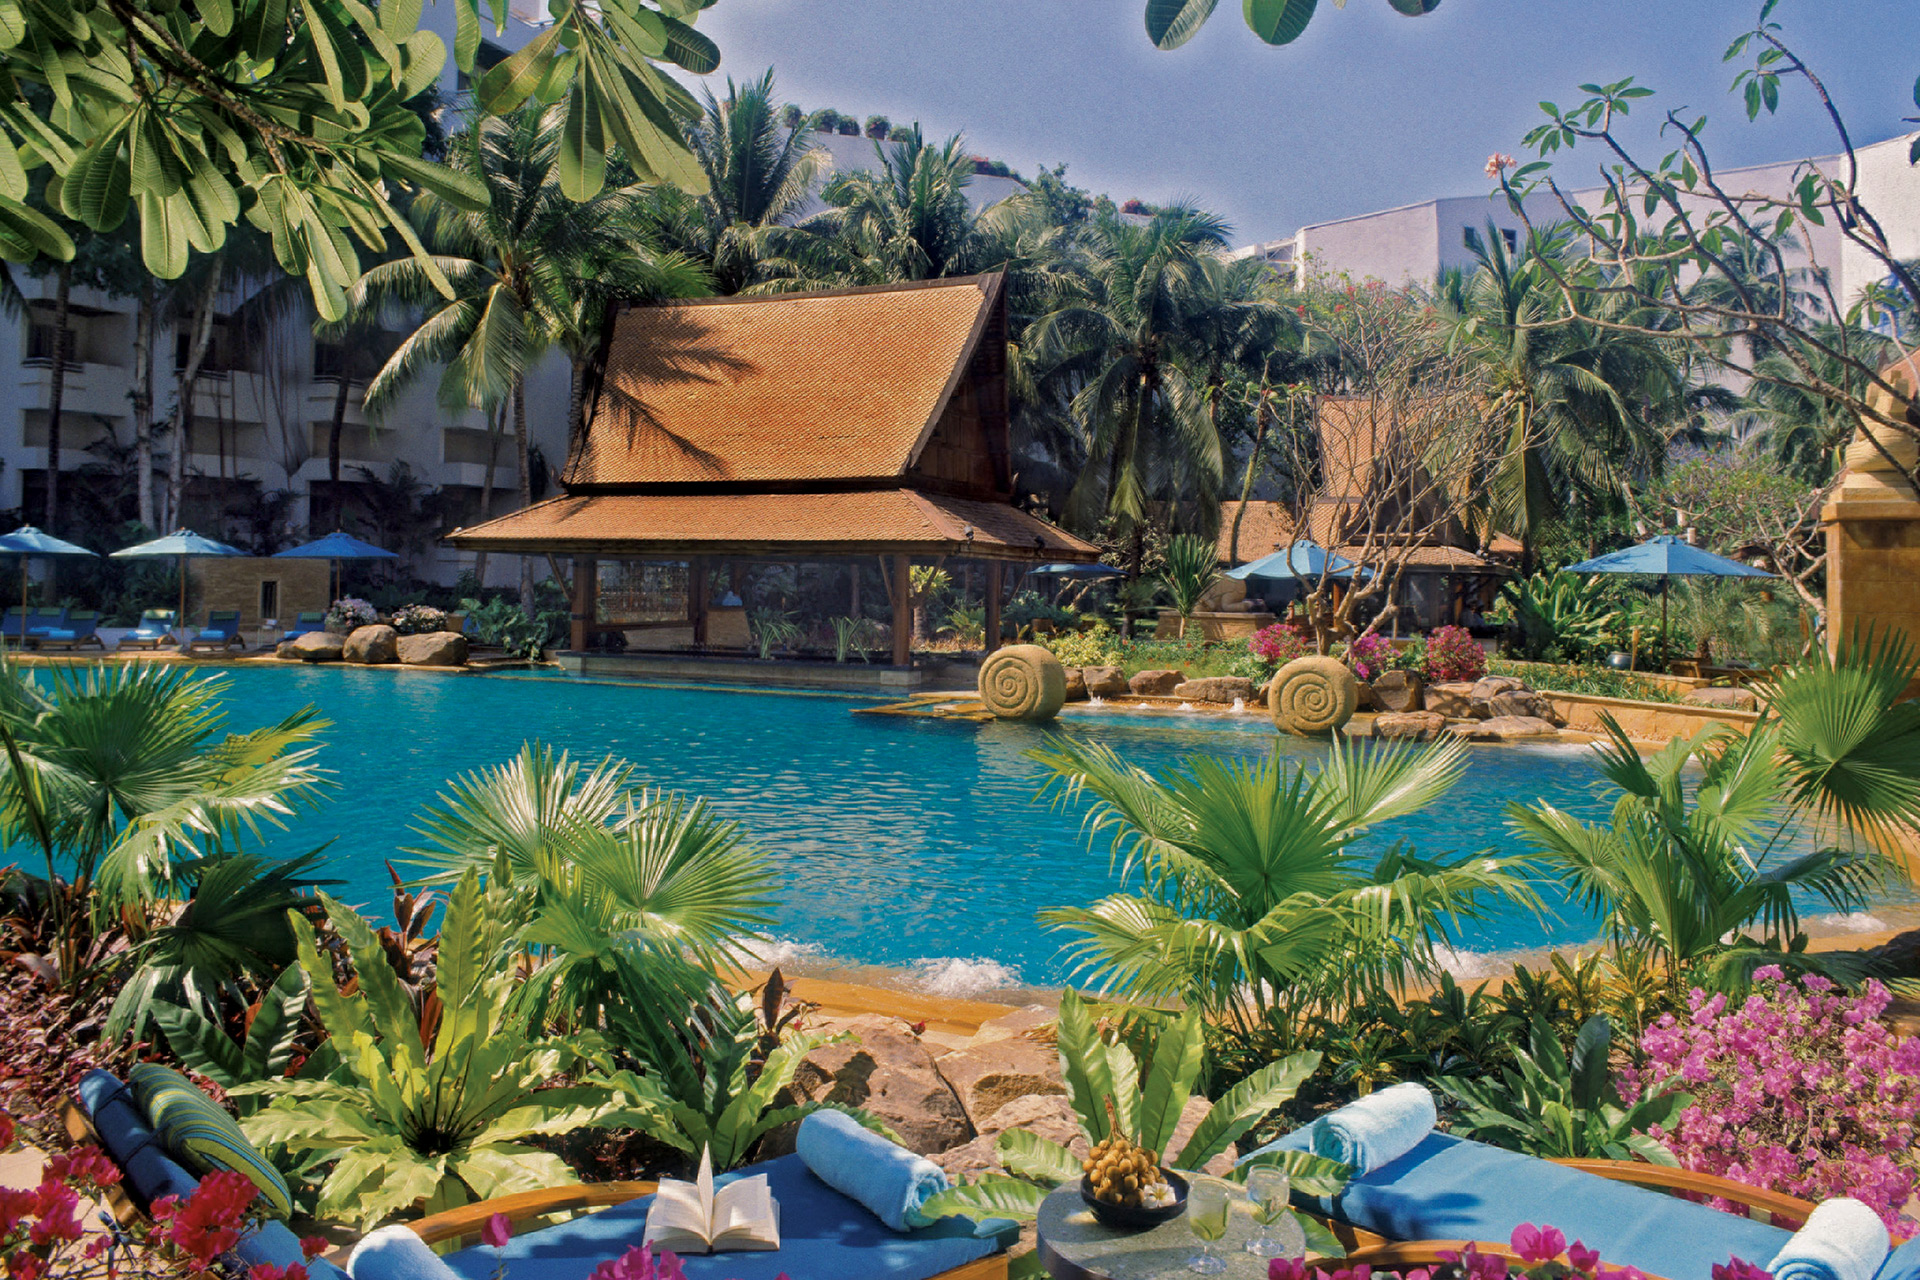 Купить путевку в паттайю. Avani Pattaya Resort. Pattaya Resort Spa 5. Аванти Паттайя Резорт. Адриатик Палас Паттайя.